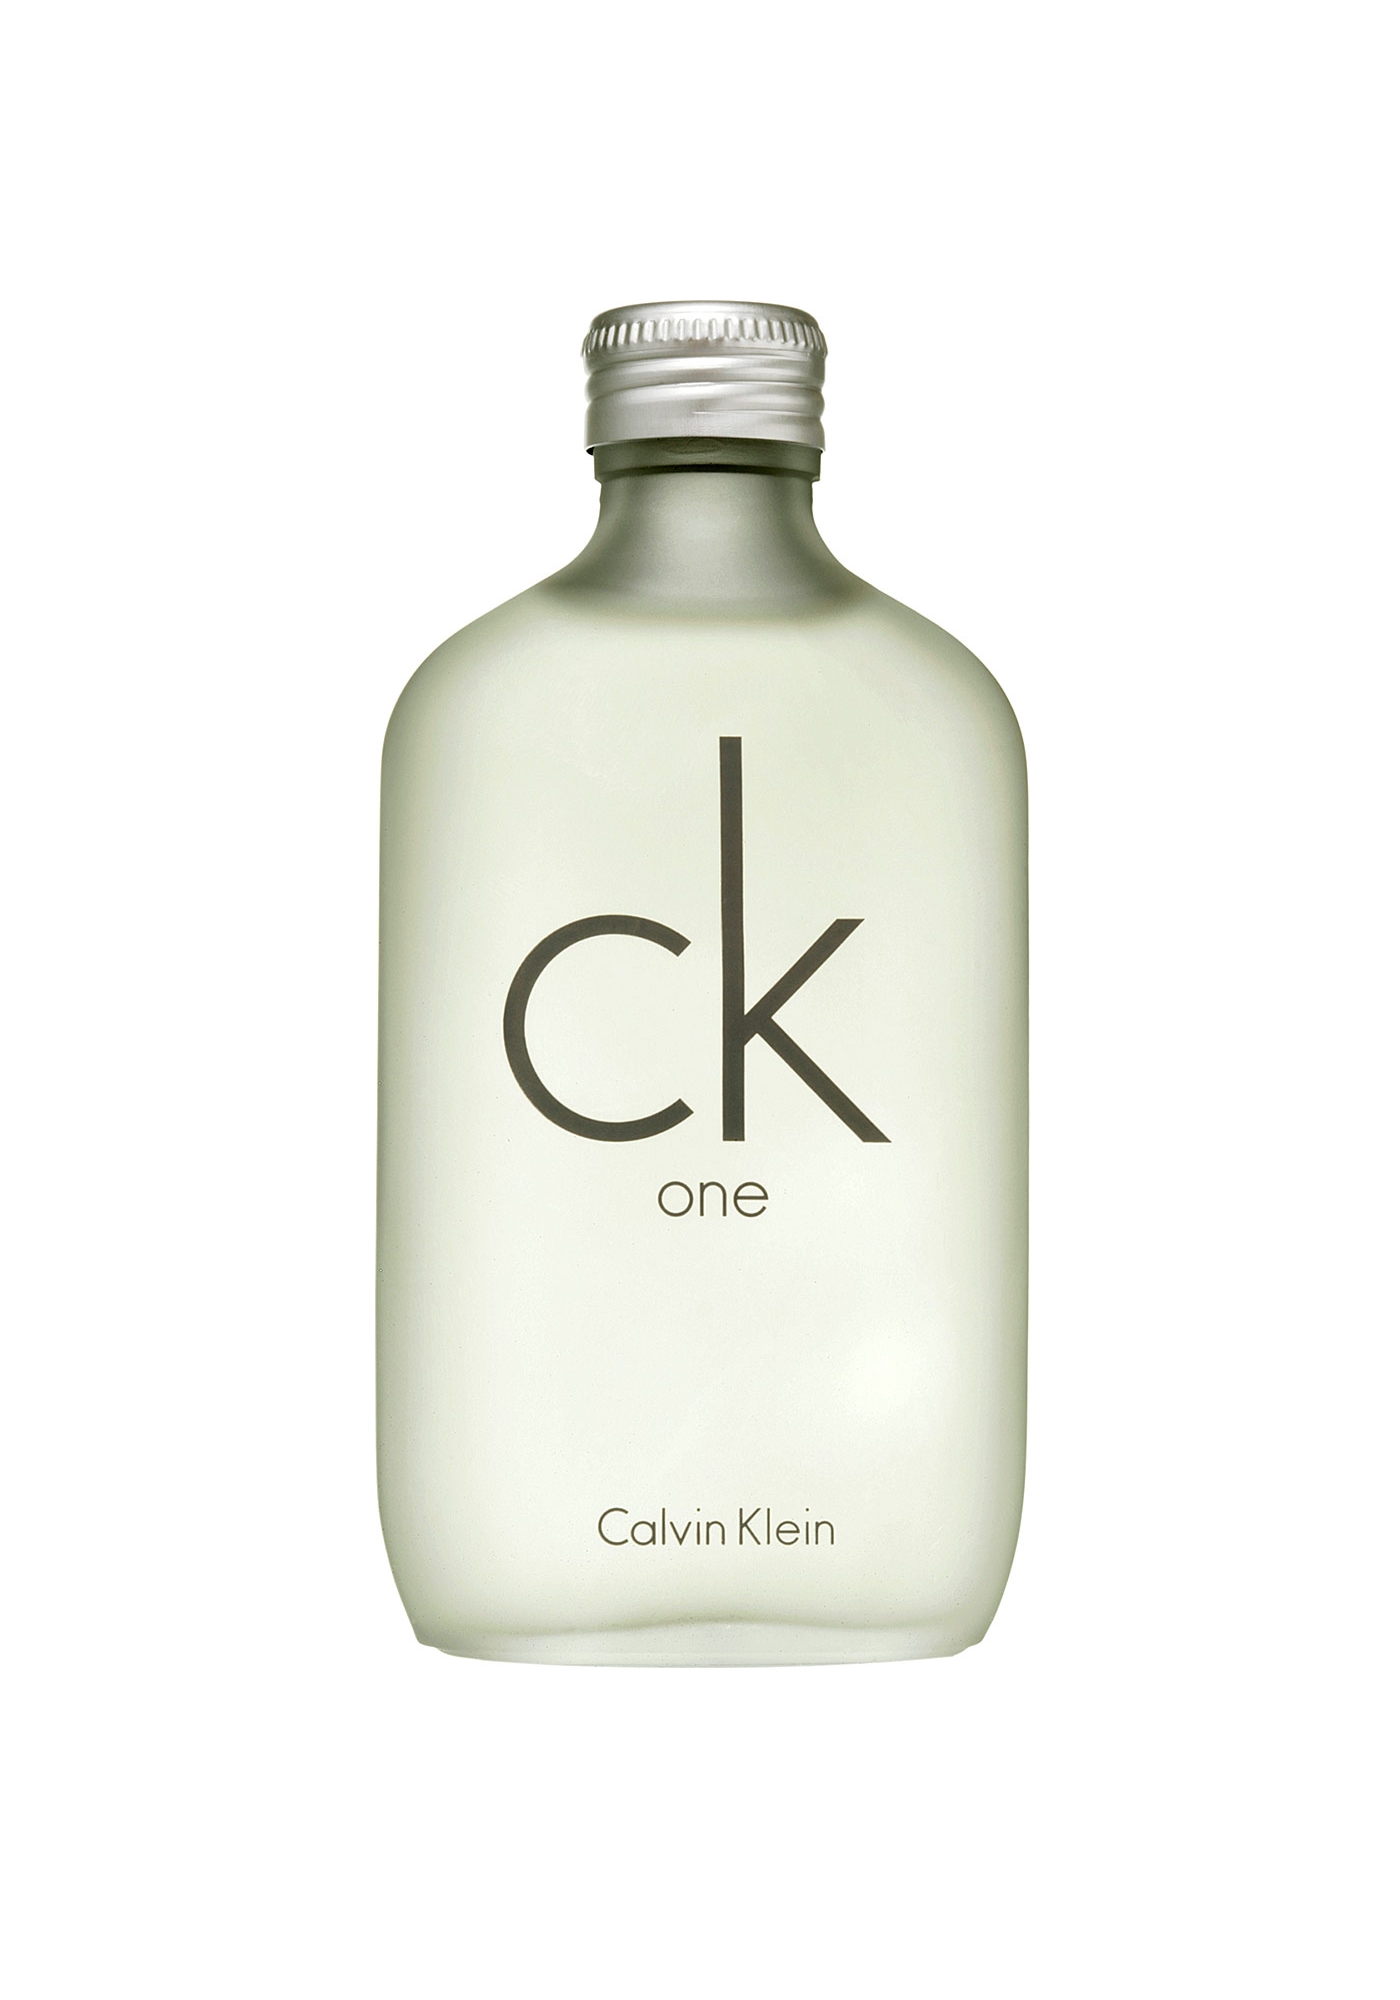 leg uit ui Stationair Heren Parfum, Calvin Klein "CK One", Eau de Toilette 50ml...